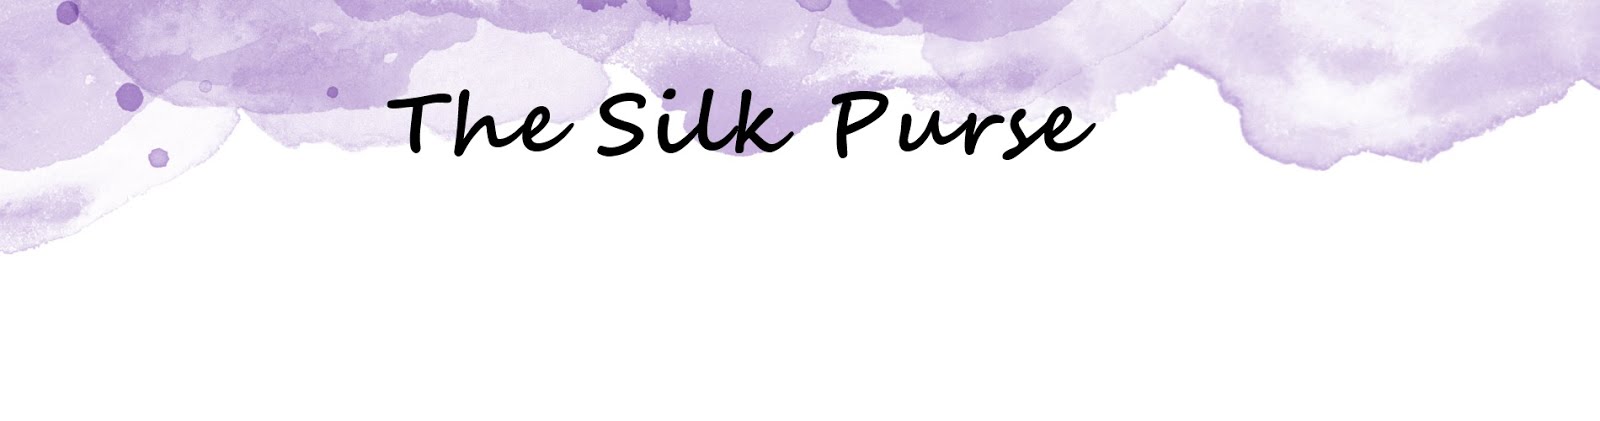 The Silk Purse